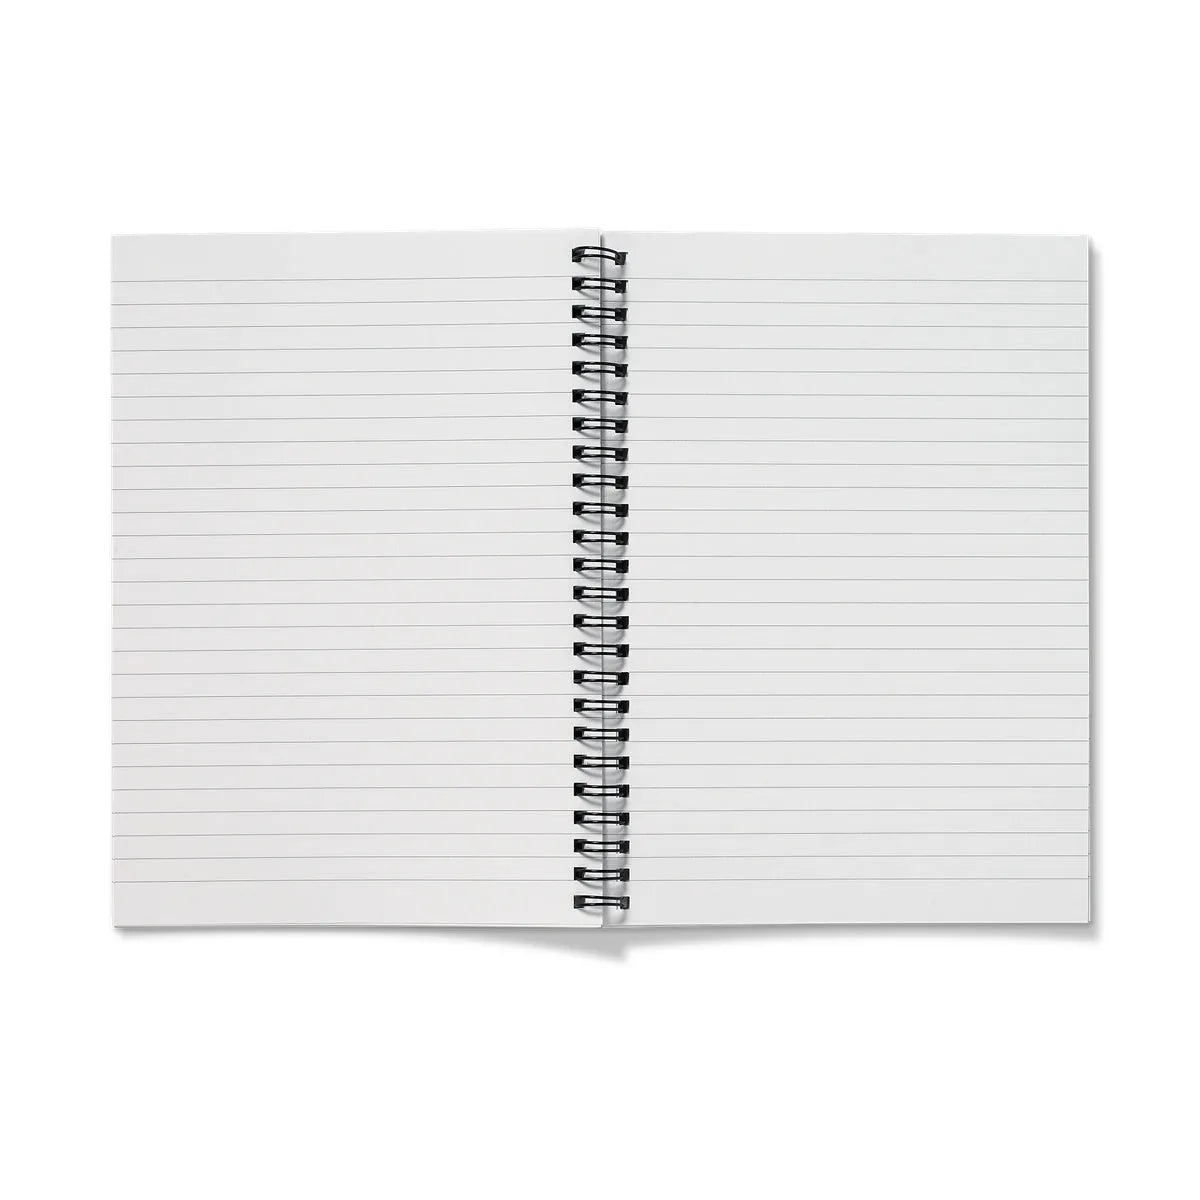 Tweedledum Notebook - Notebooks & Notepads - Aesthetic Art